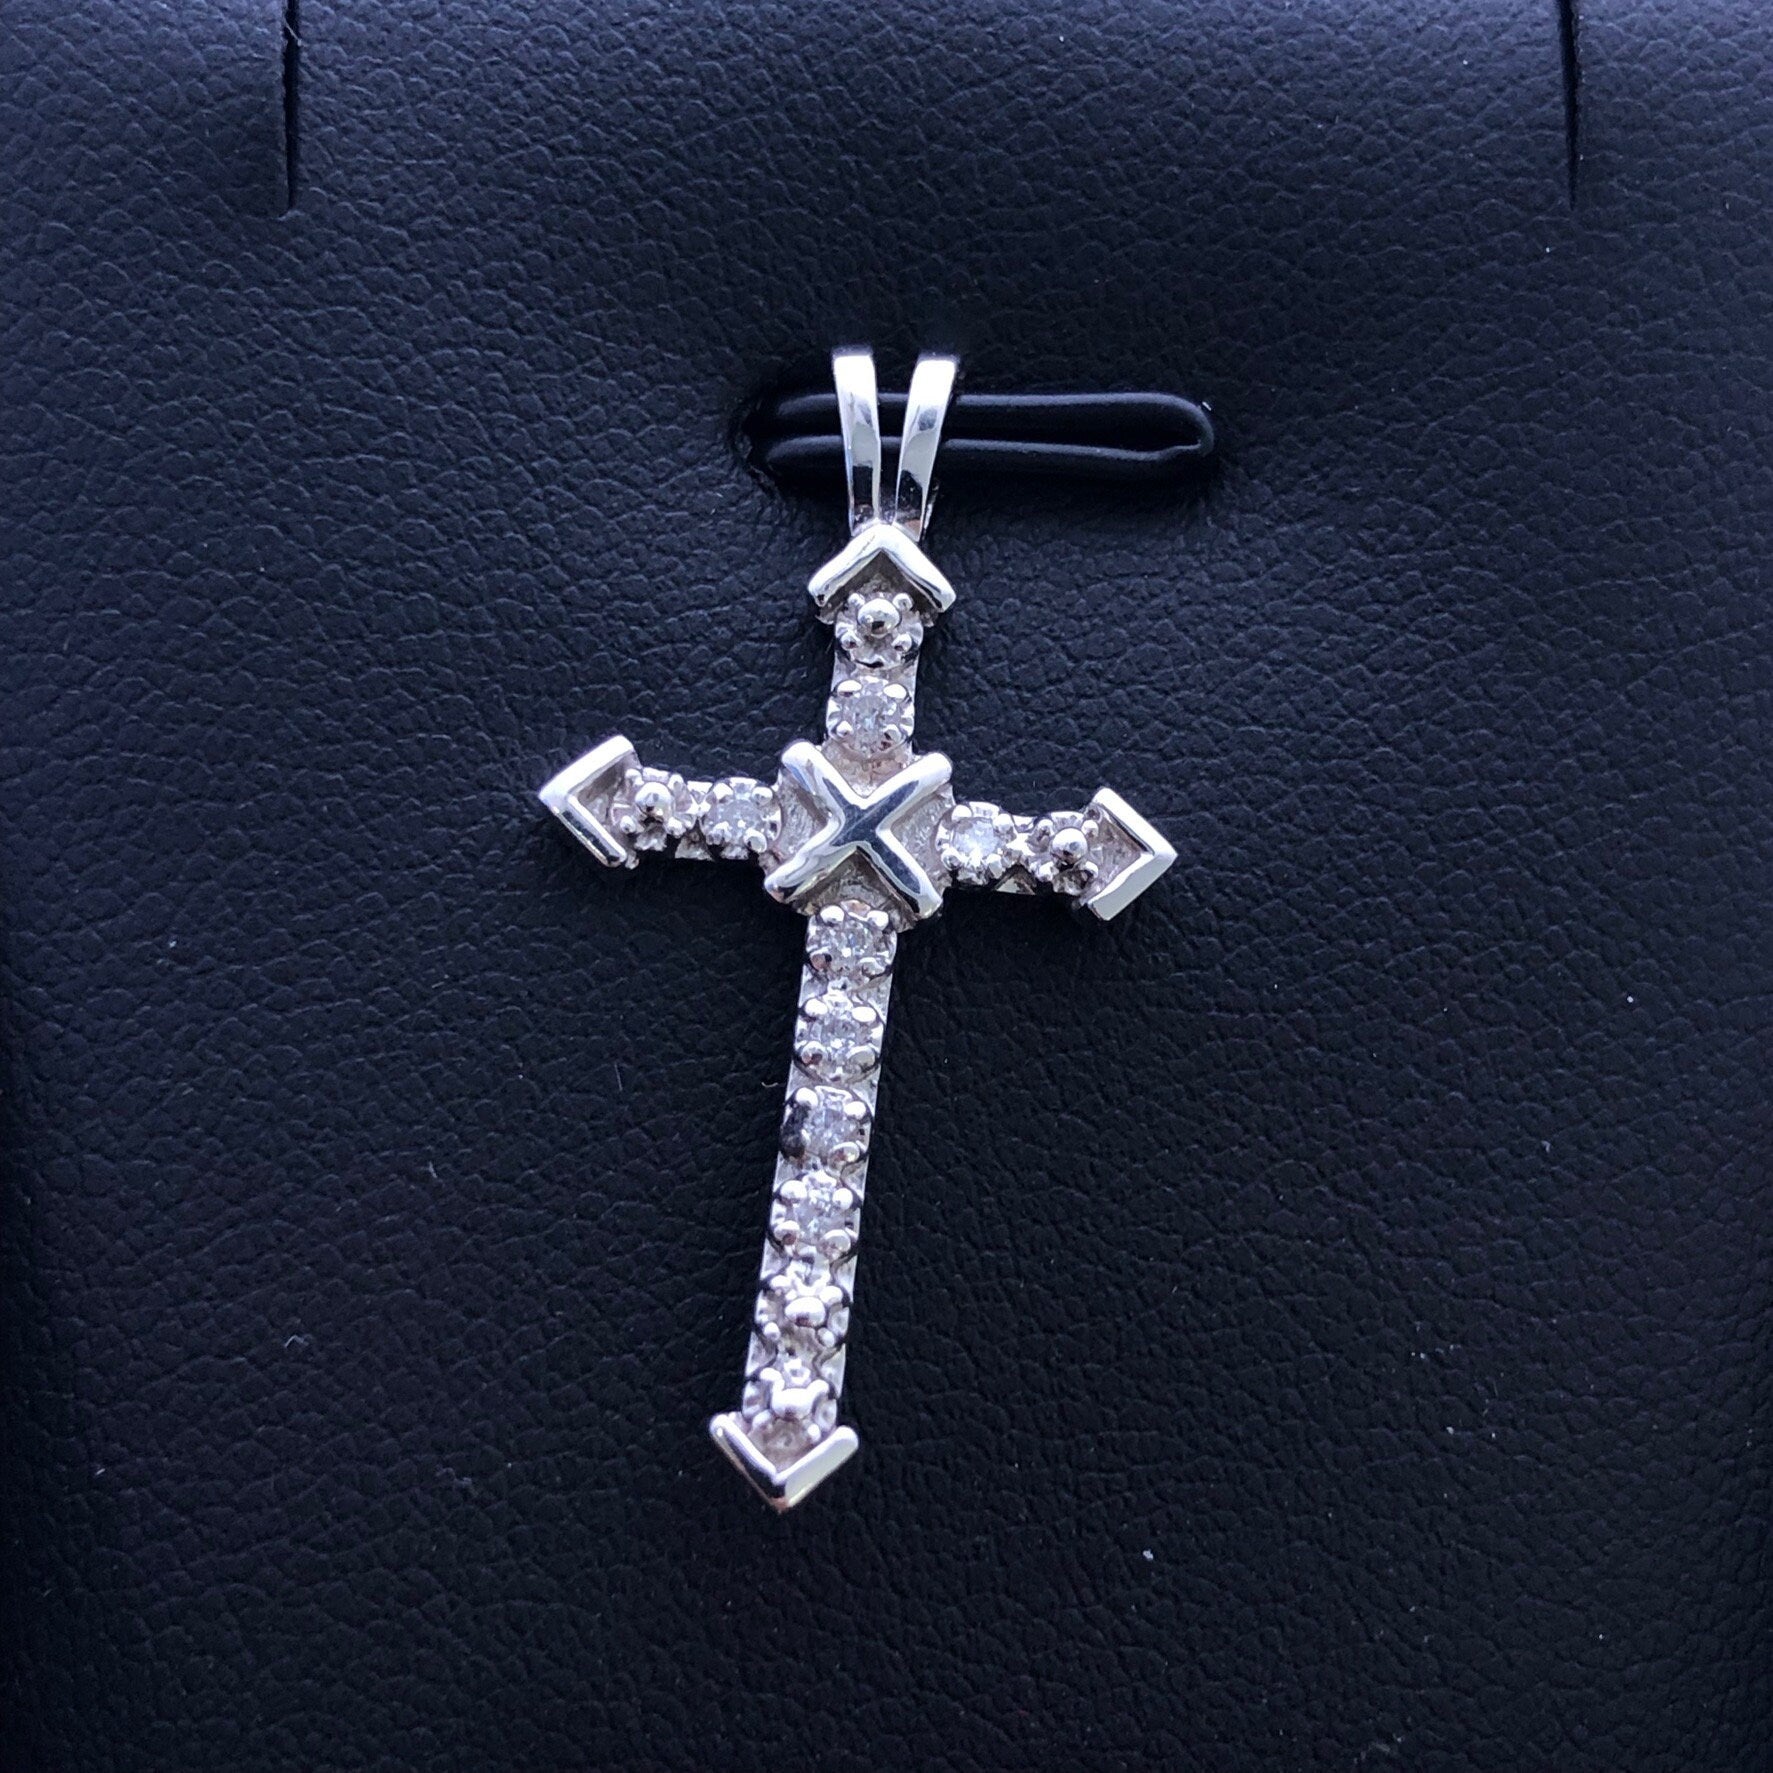 LIV 14k White Gold & Diamonds Cross Charm X Design Pave Set Pendant Necklace Gift